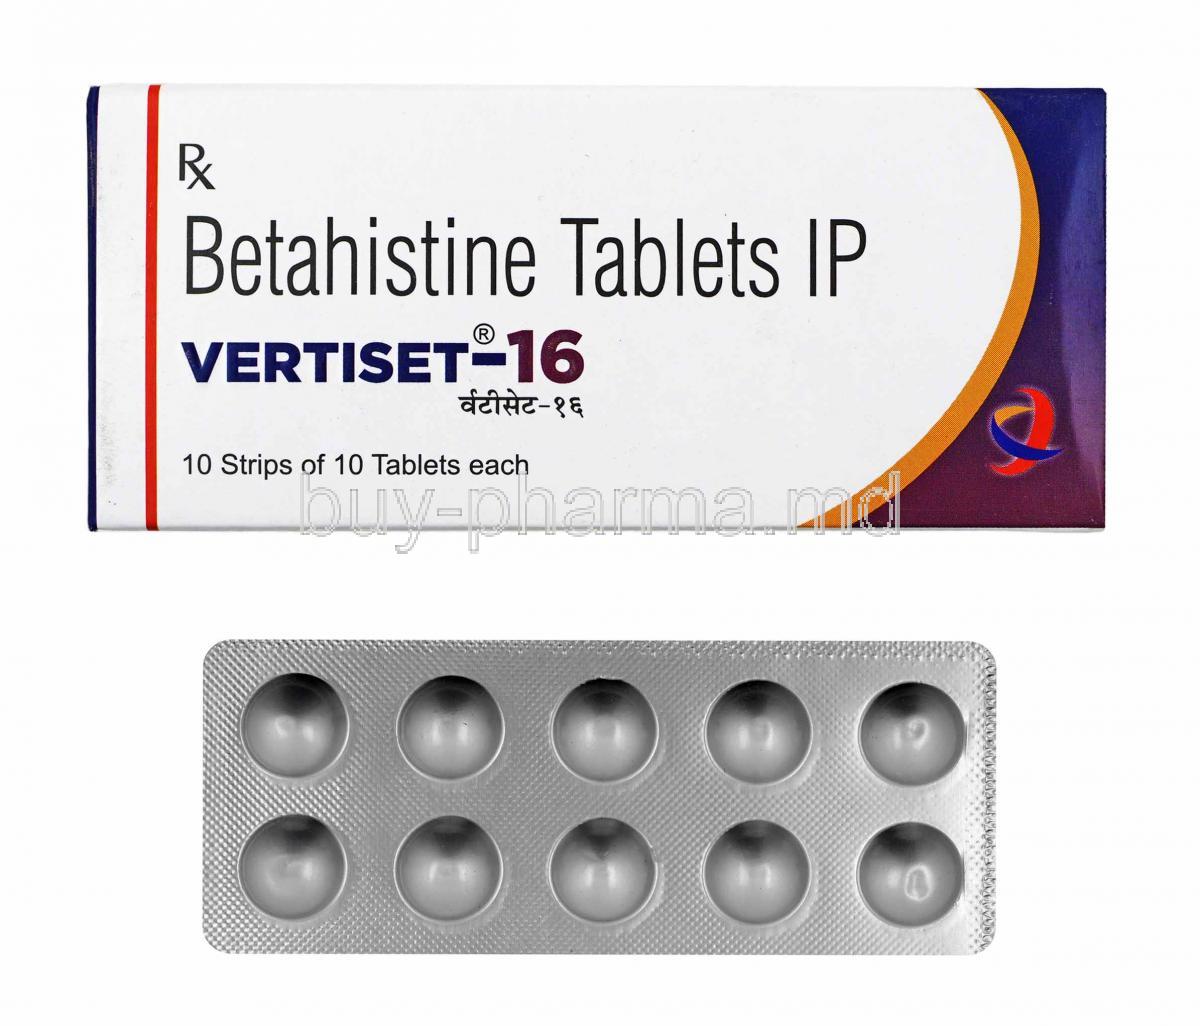 Vertiset, Betahistine 16mg box and tablets